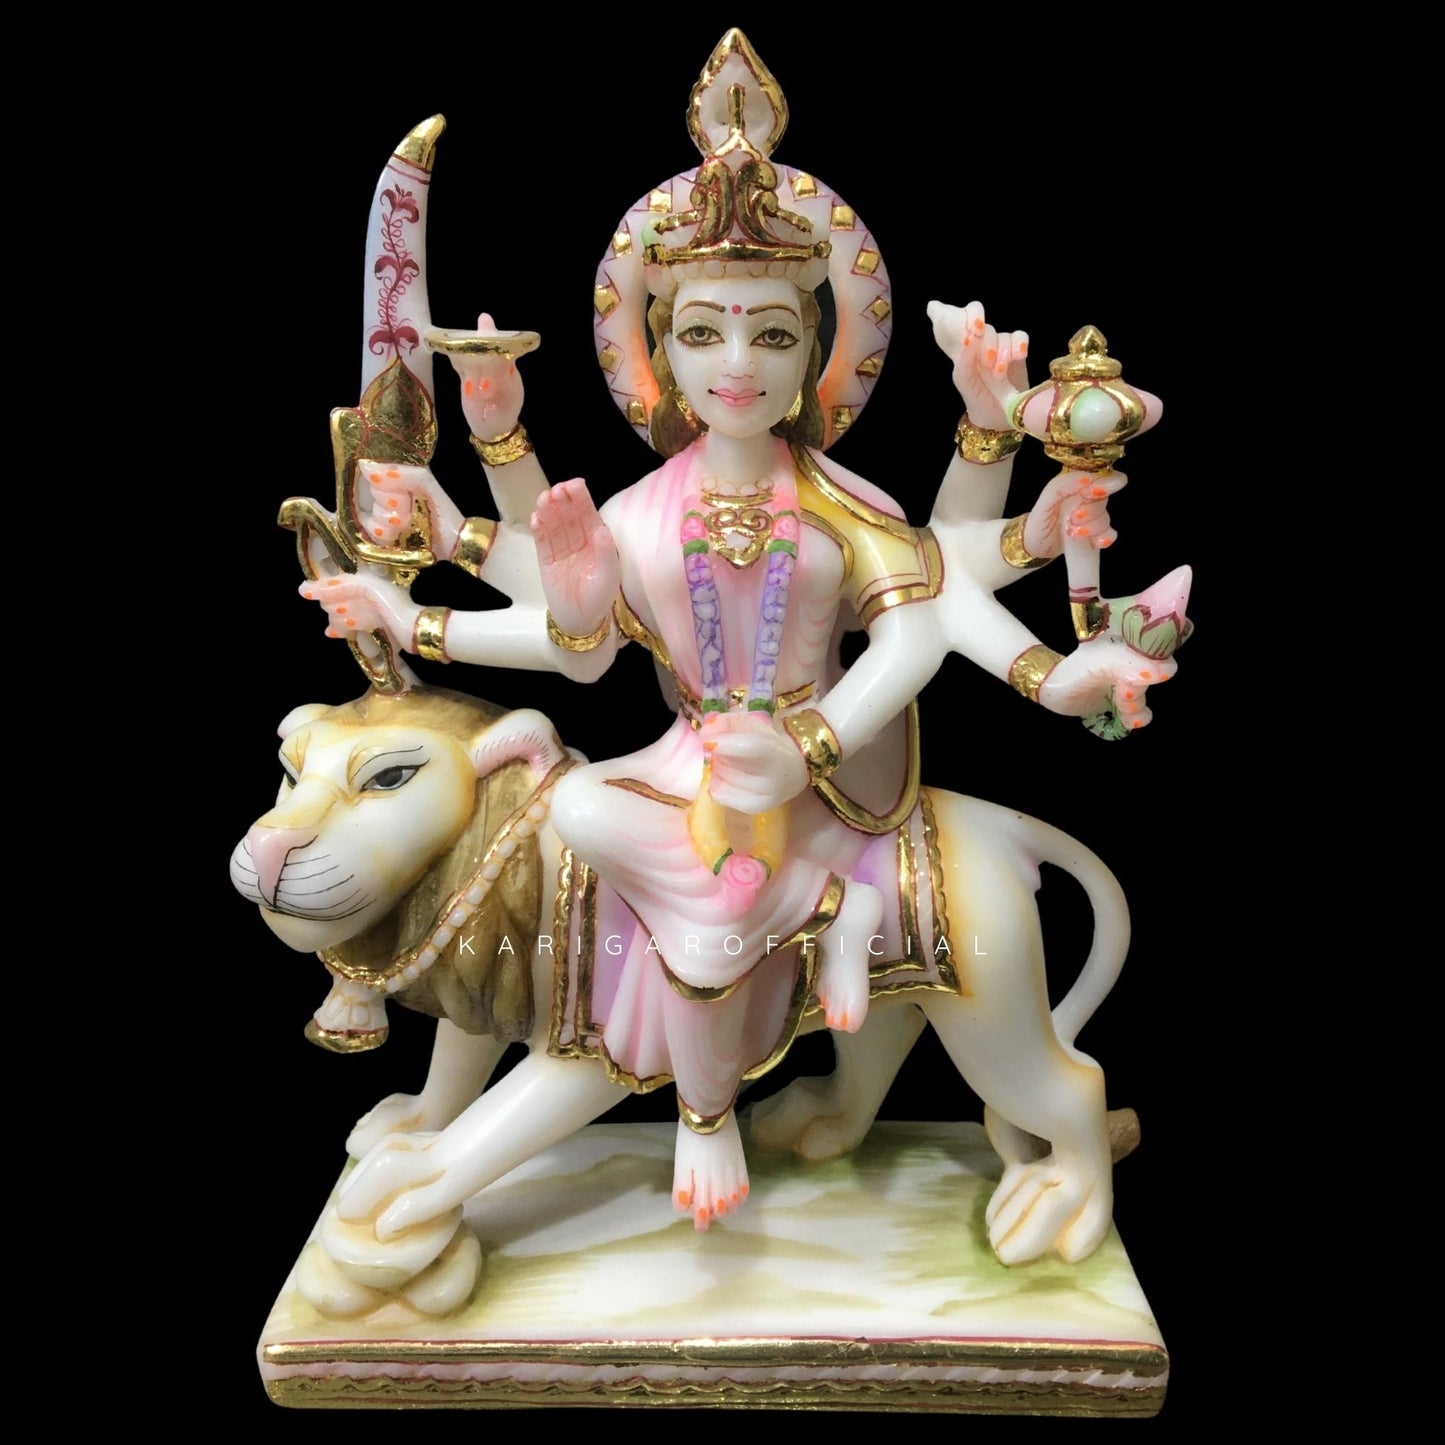 Durga Statue, Large 12 inches Marble Murti, Calm Maa Durga Sitting on Lion Figurine, Hindu Goddess of Strength, Amba Statue for Navratri Puja, Maa Sherawali Adi Shakti Idol, Indian Home Temple Decor